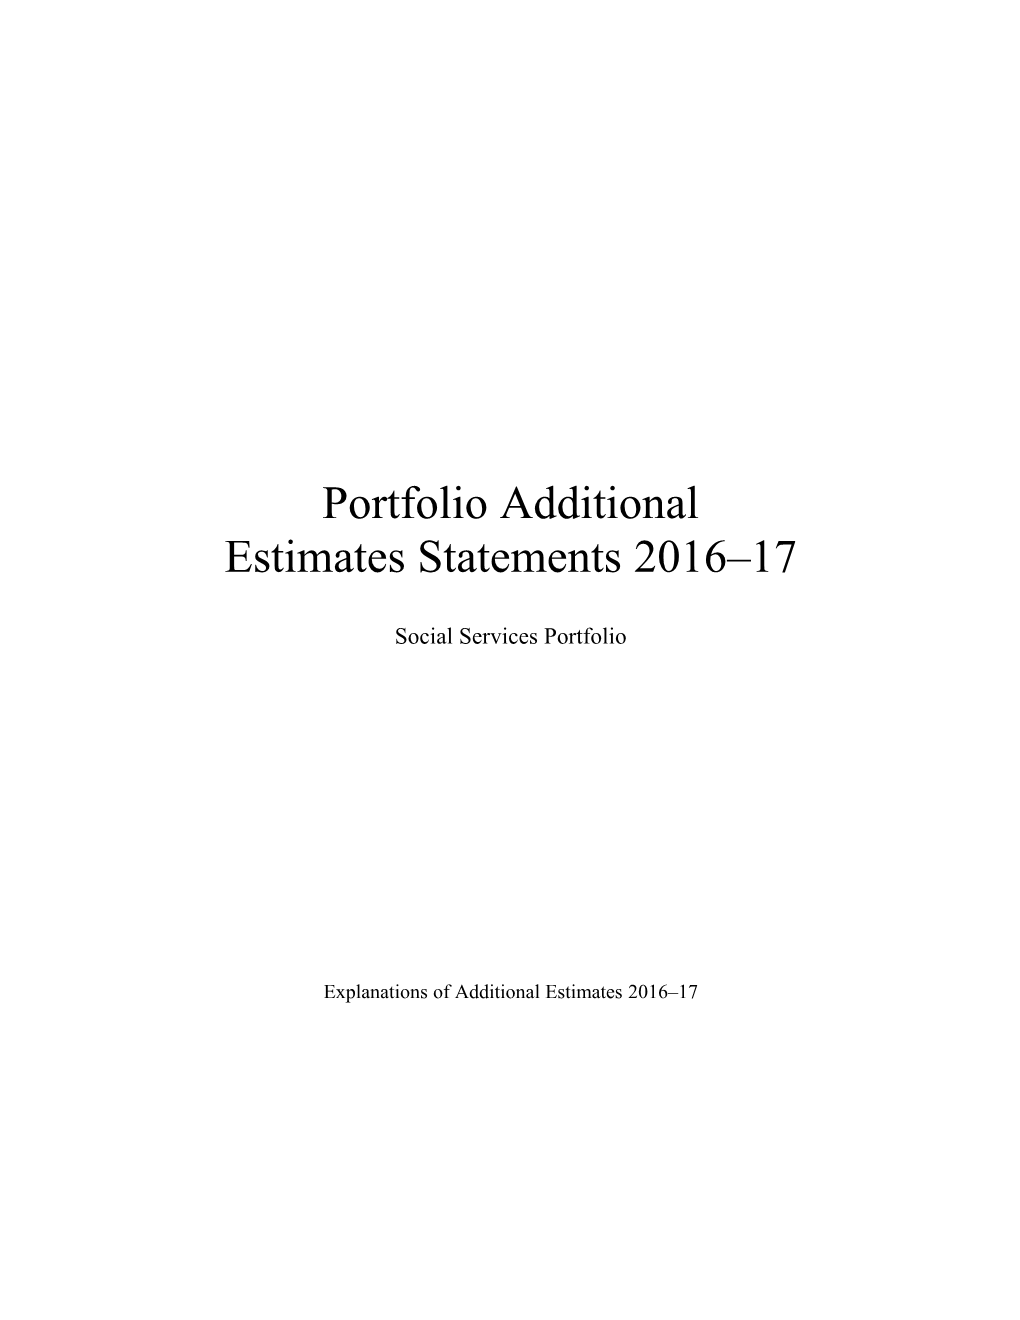 2016-17 DSS Portfolio Additional Estimates Statements (PAES)